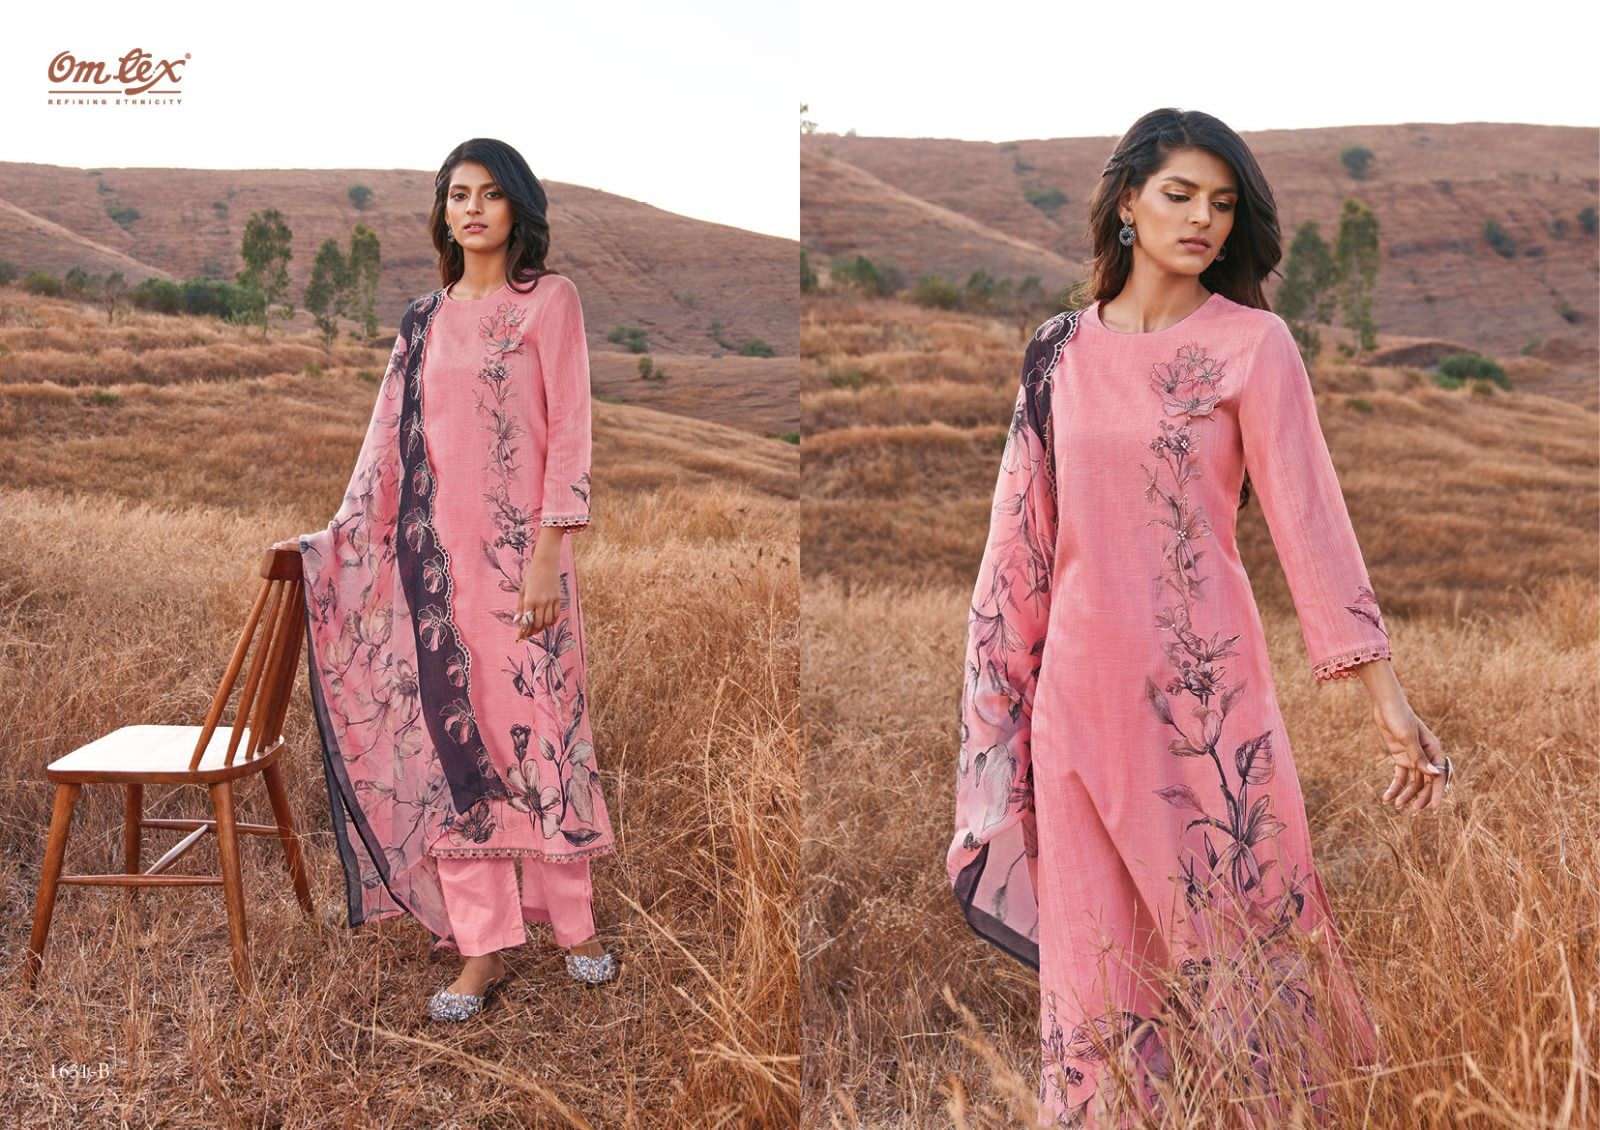 om tex kinsley 1631 series stylish designer salwar kameez catalogue collection 2023